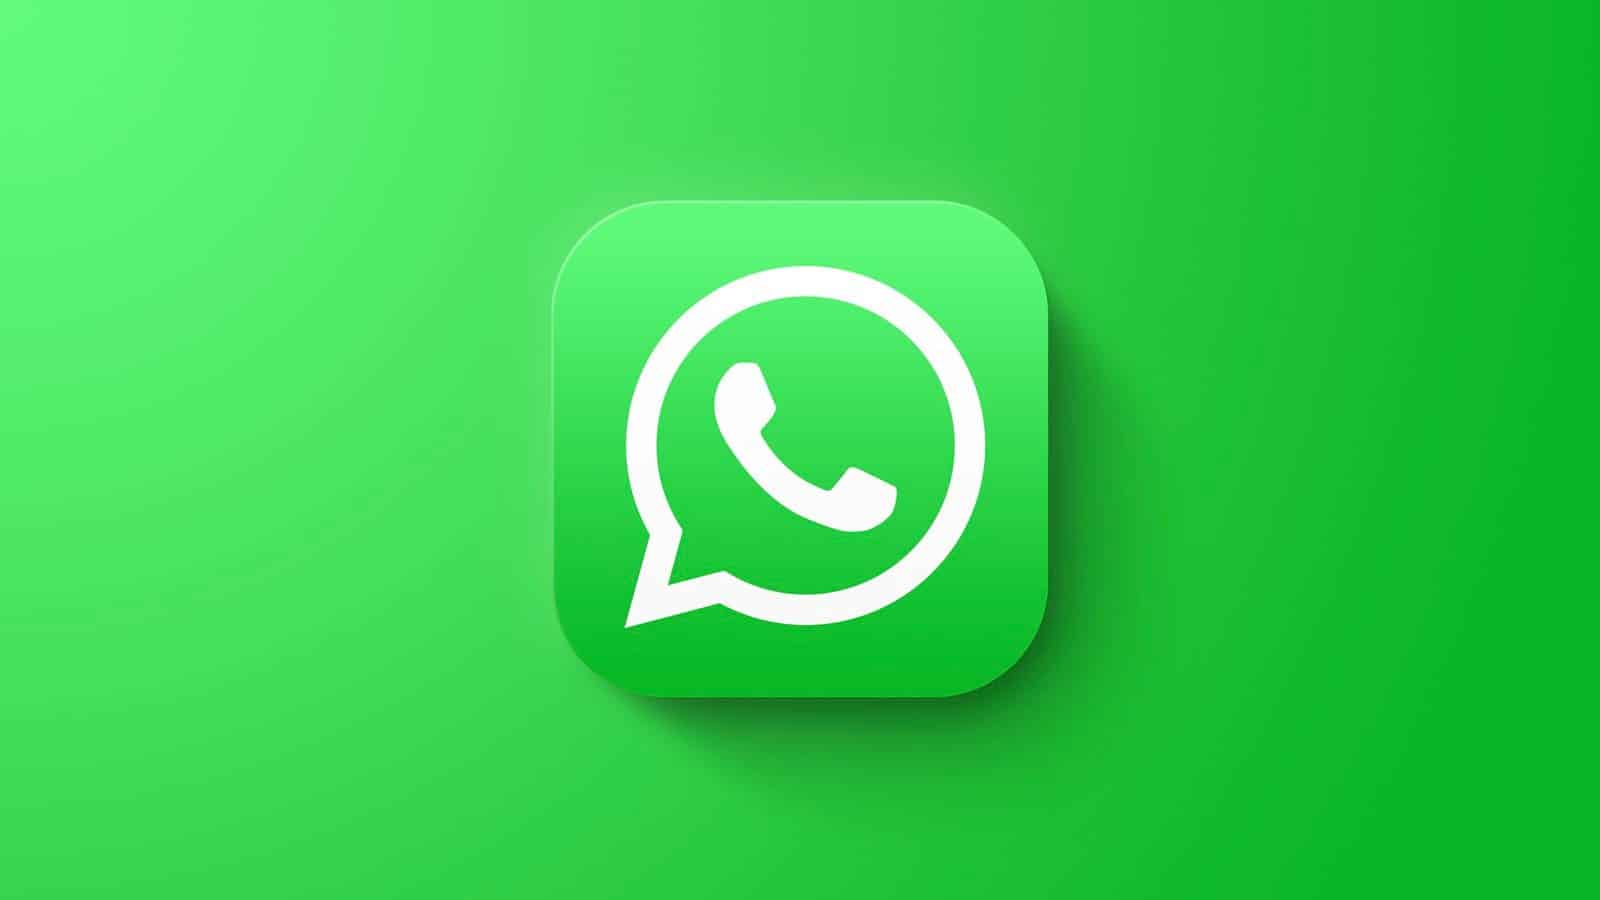 WhatsApp Featured